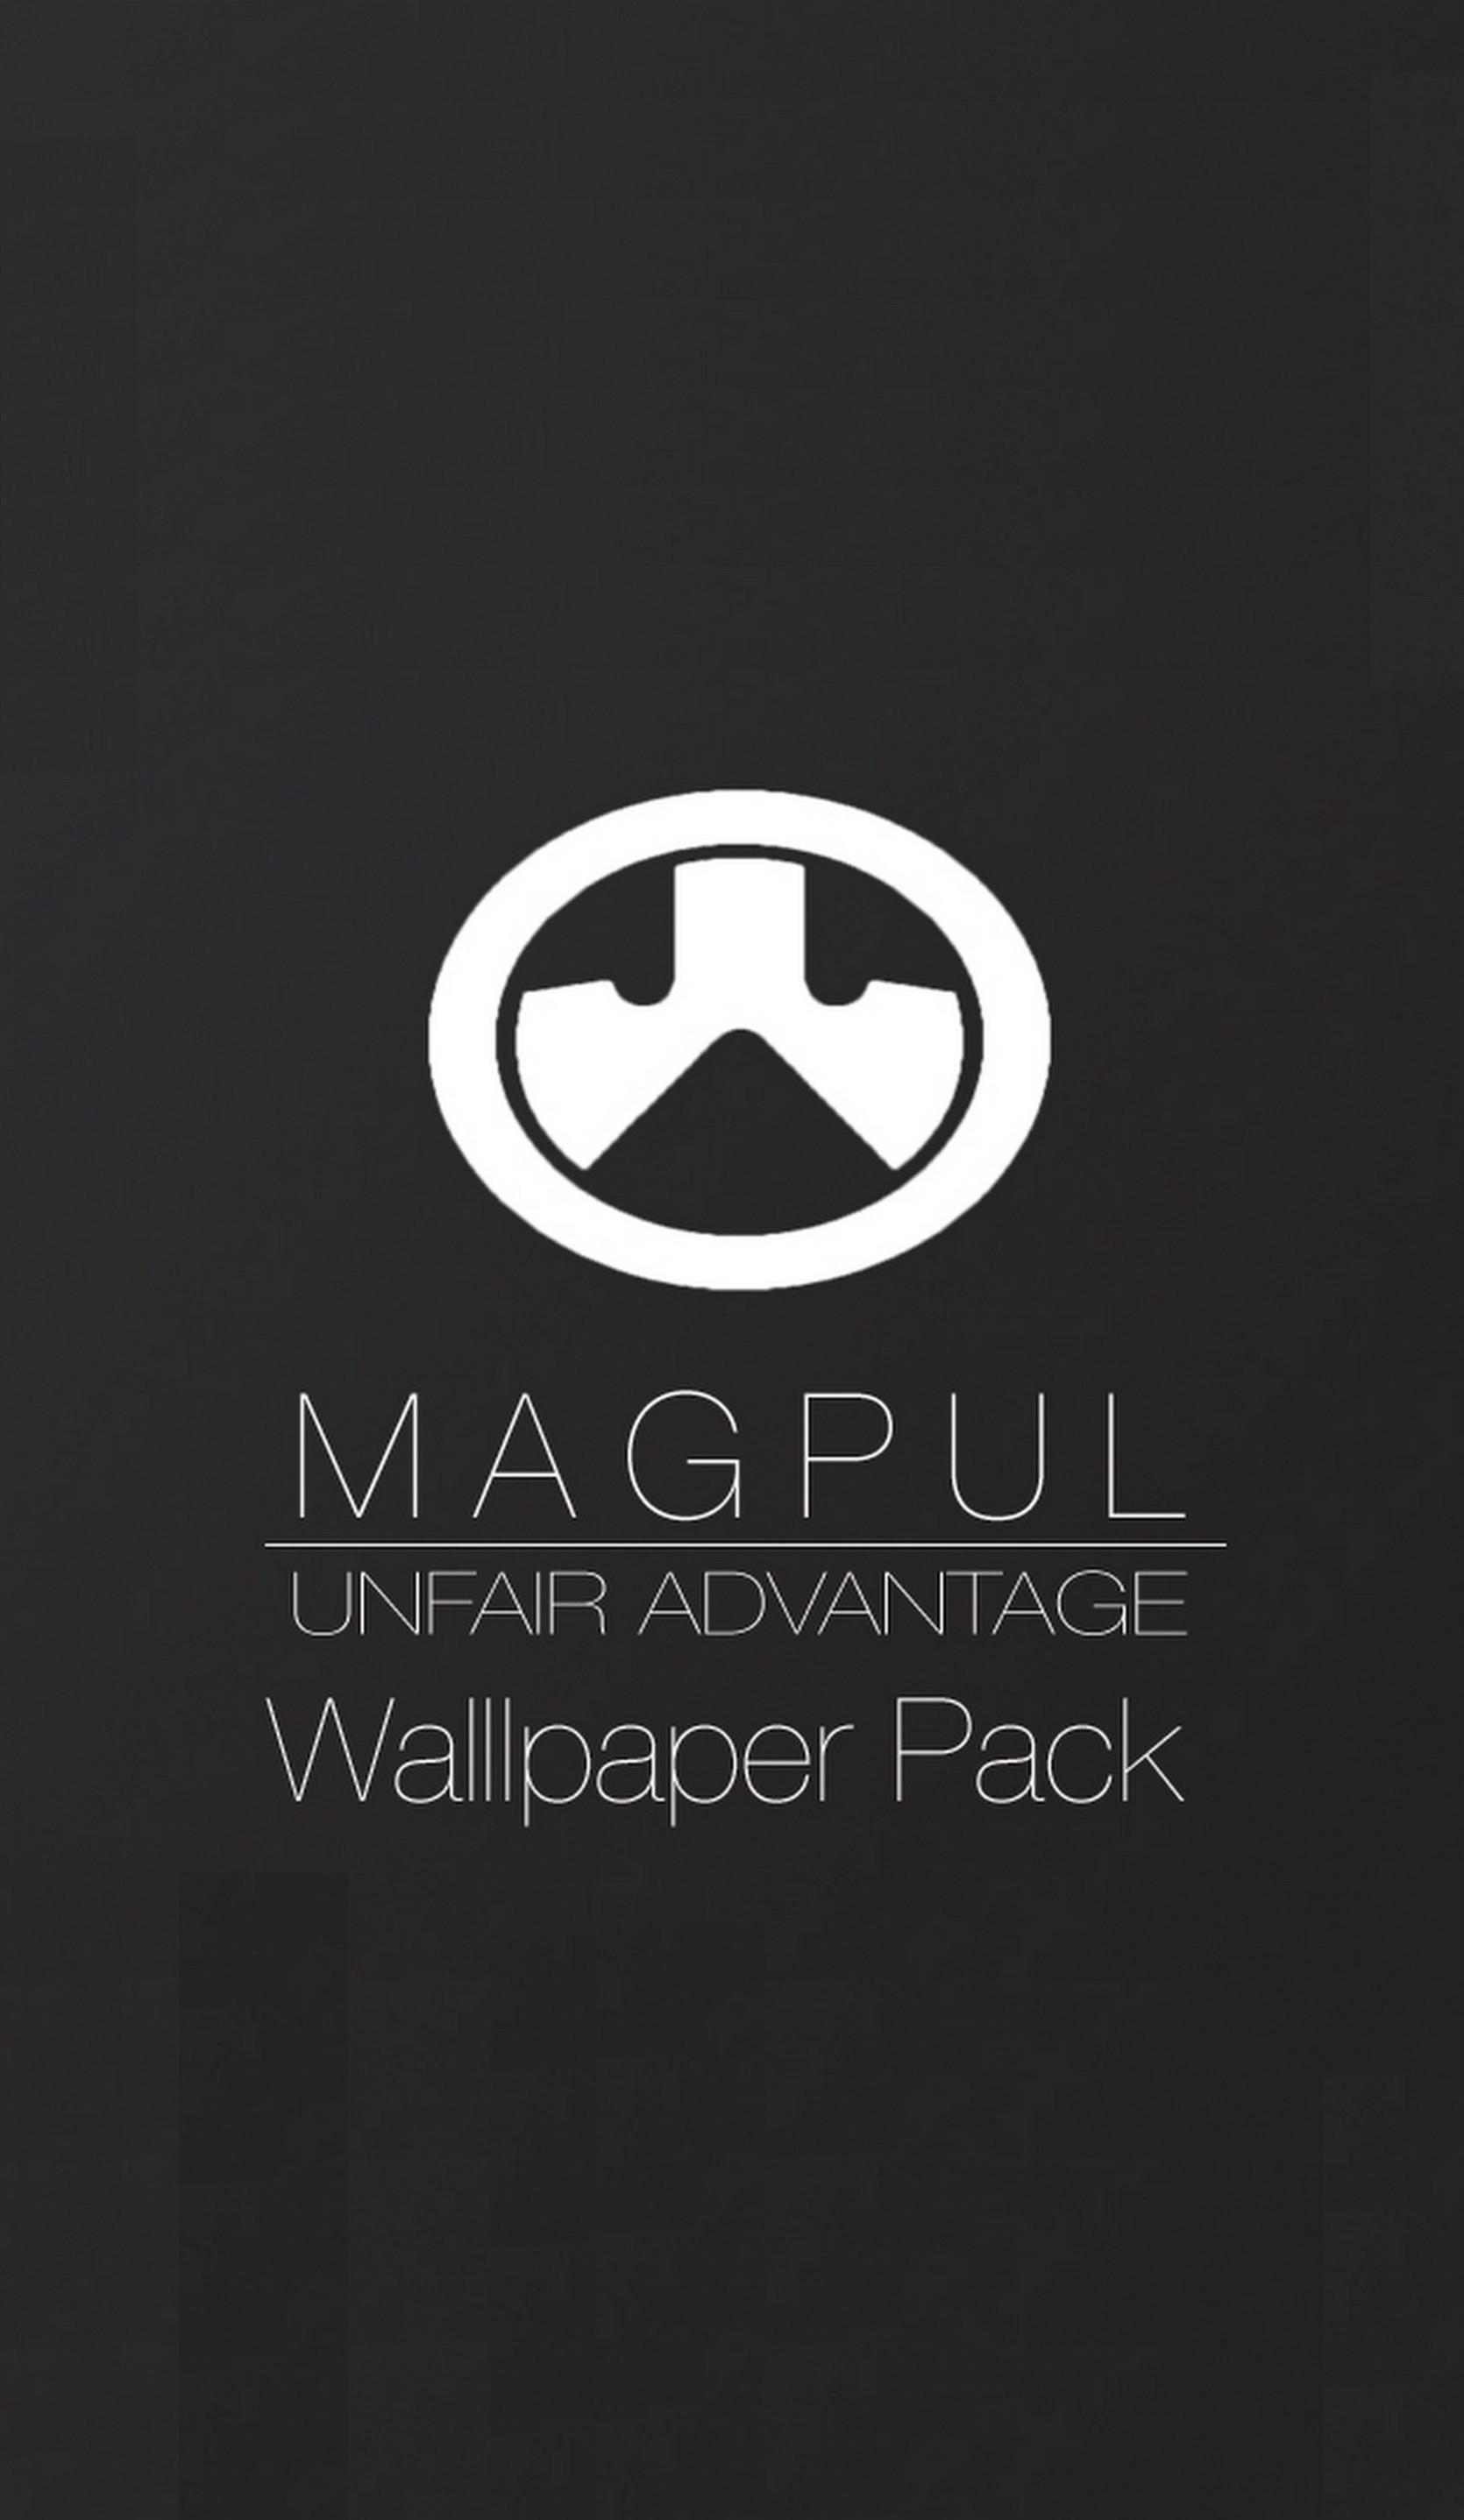 Magpul Iphone Wallpaper Magpul iphone